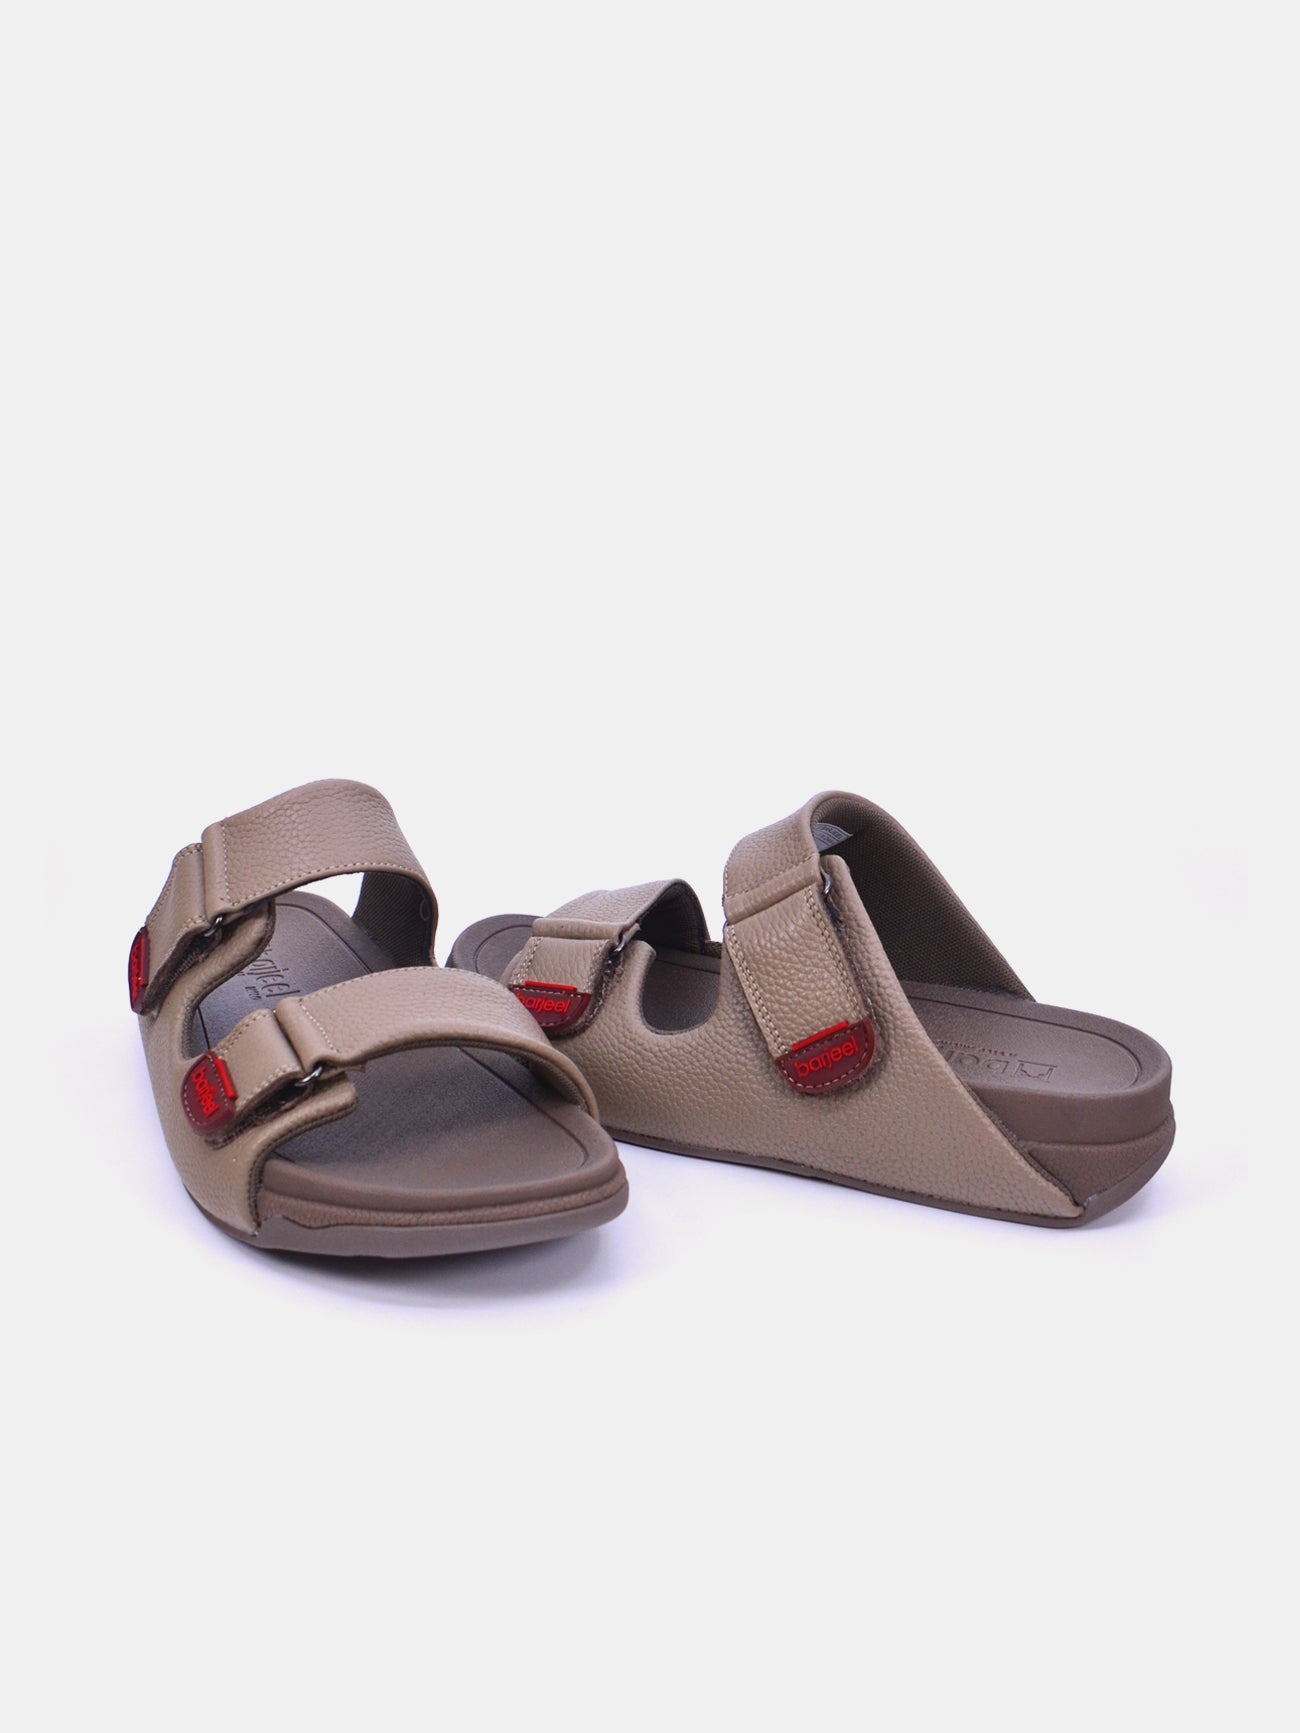 Barjeel Uno 20272 Men's Arabic Sandals #color_Taupe